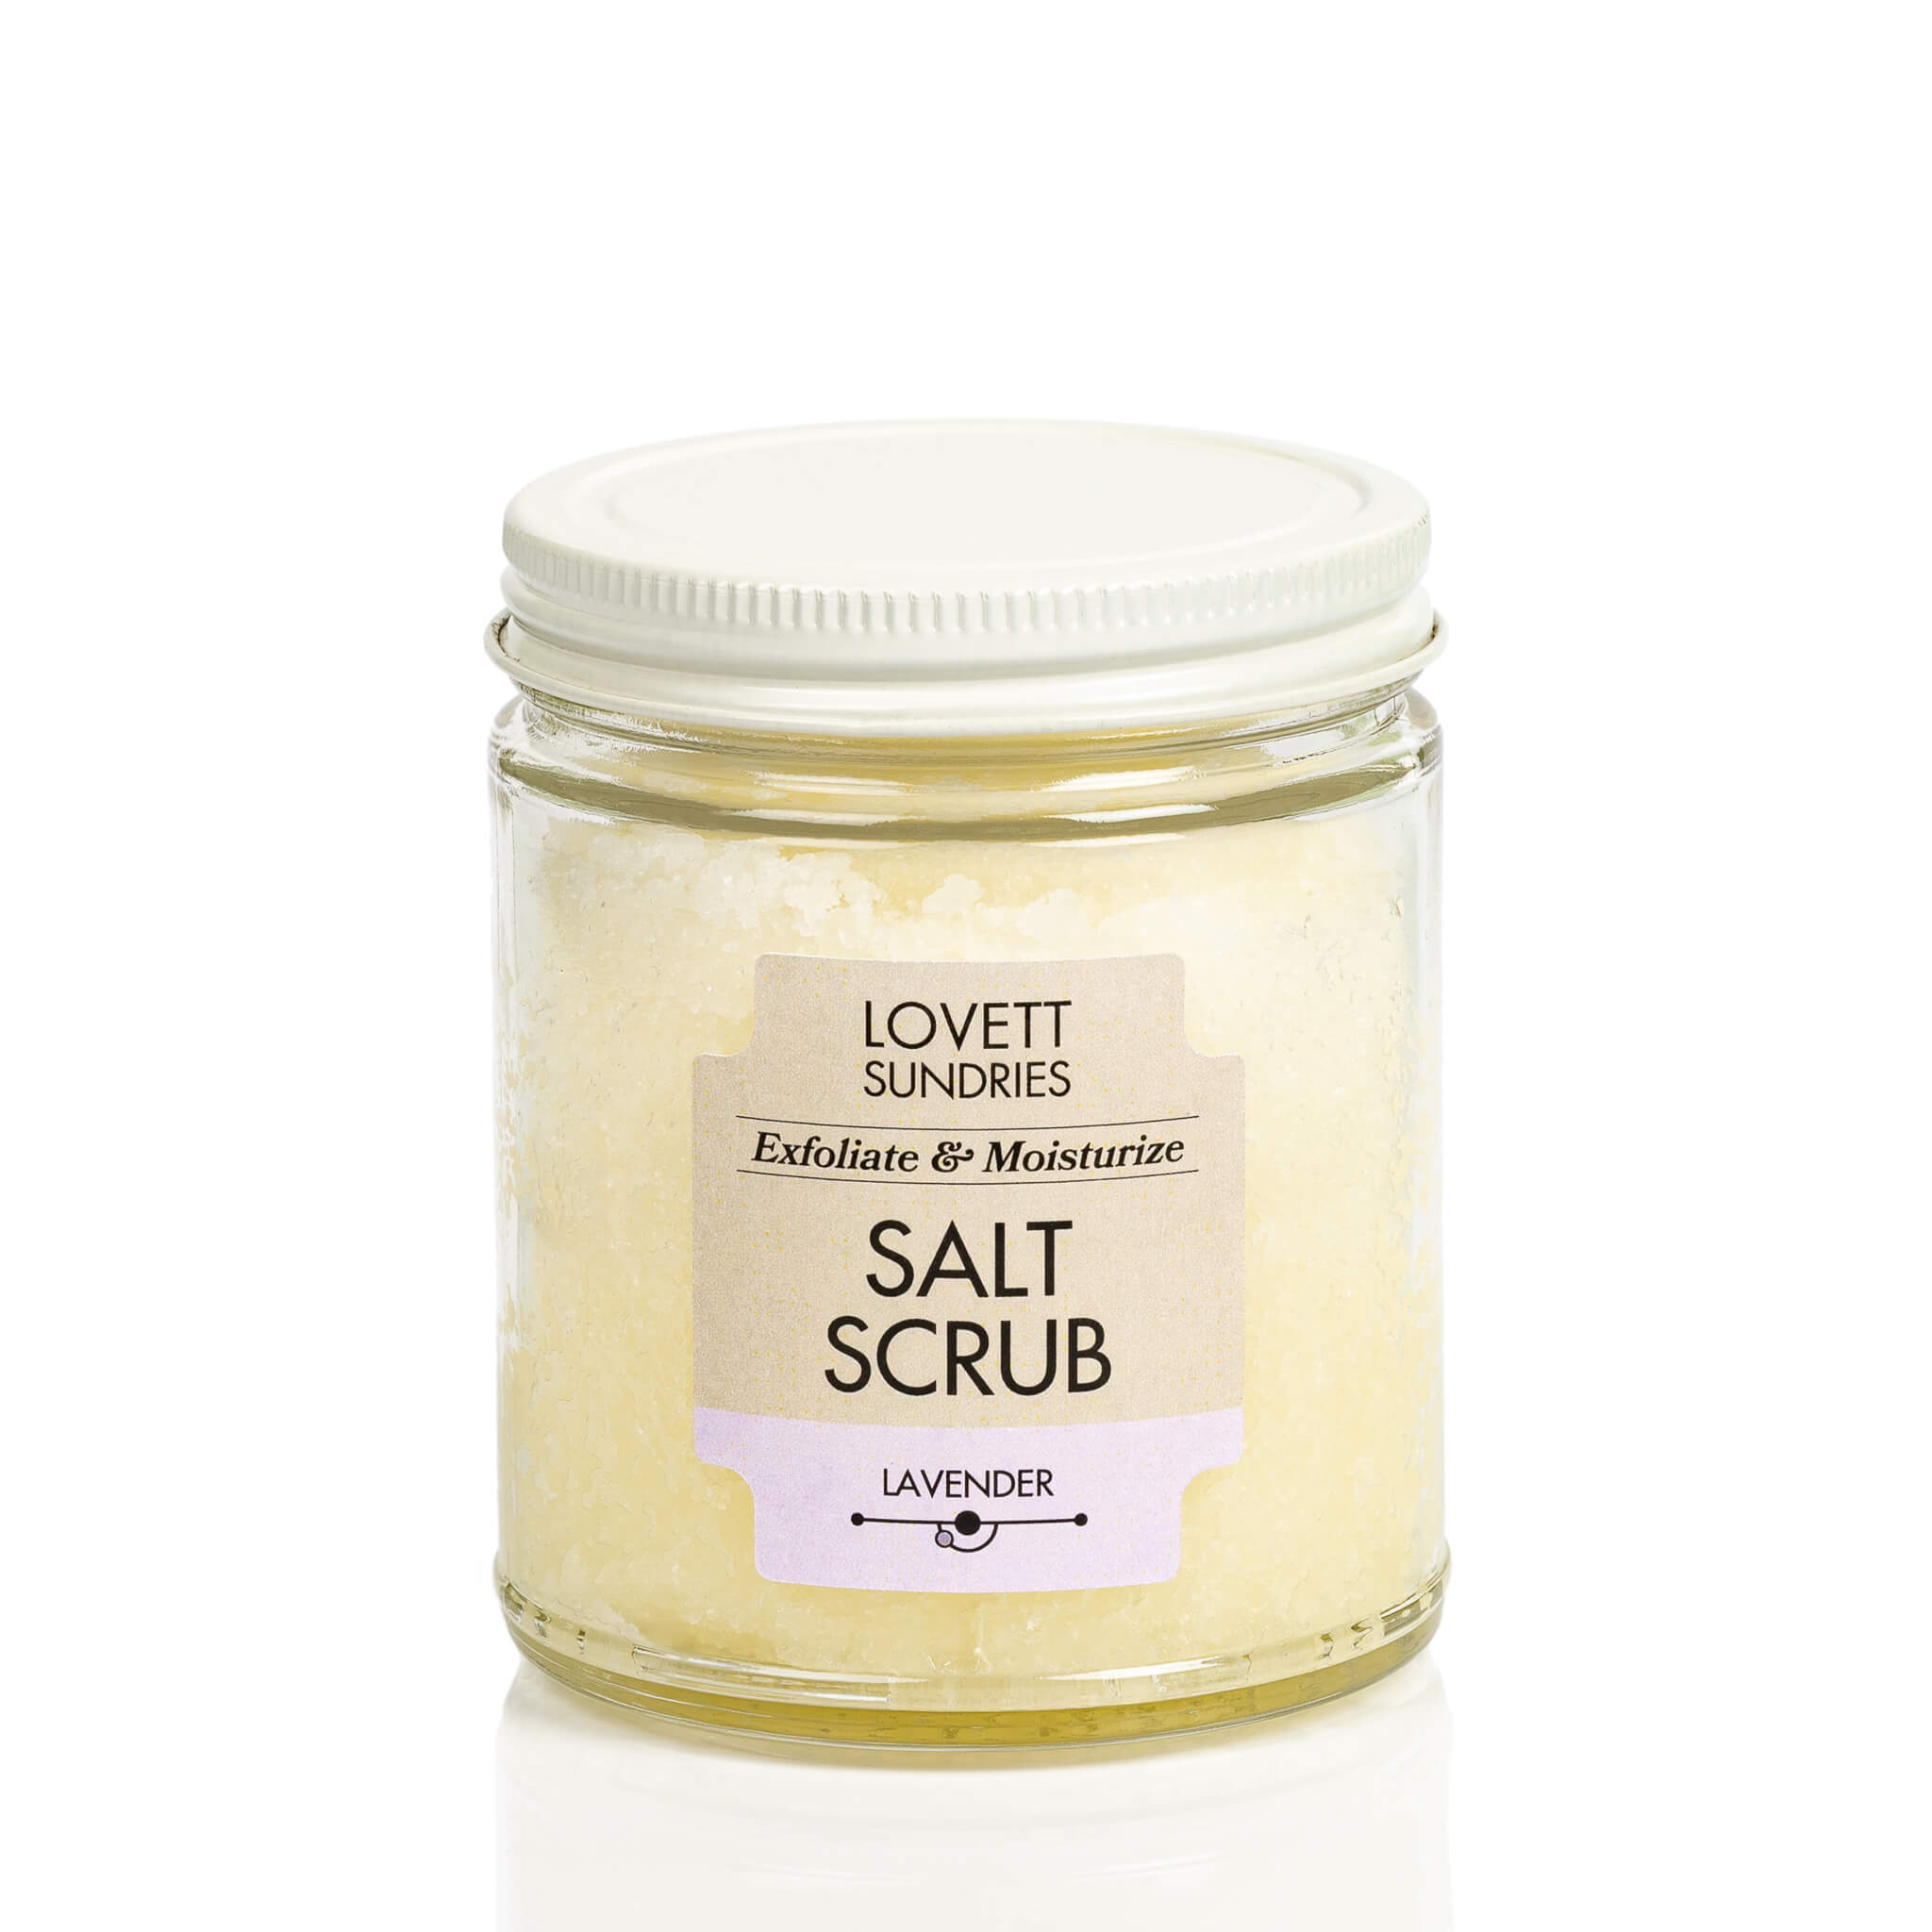 Exfoliating and moisturizing lavender scented all natural salt scrub. 